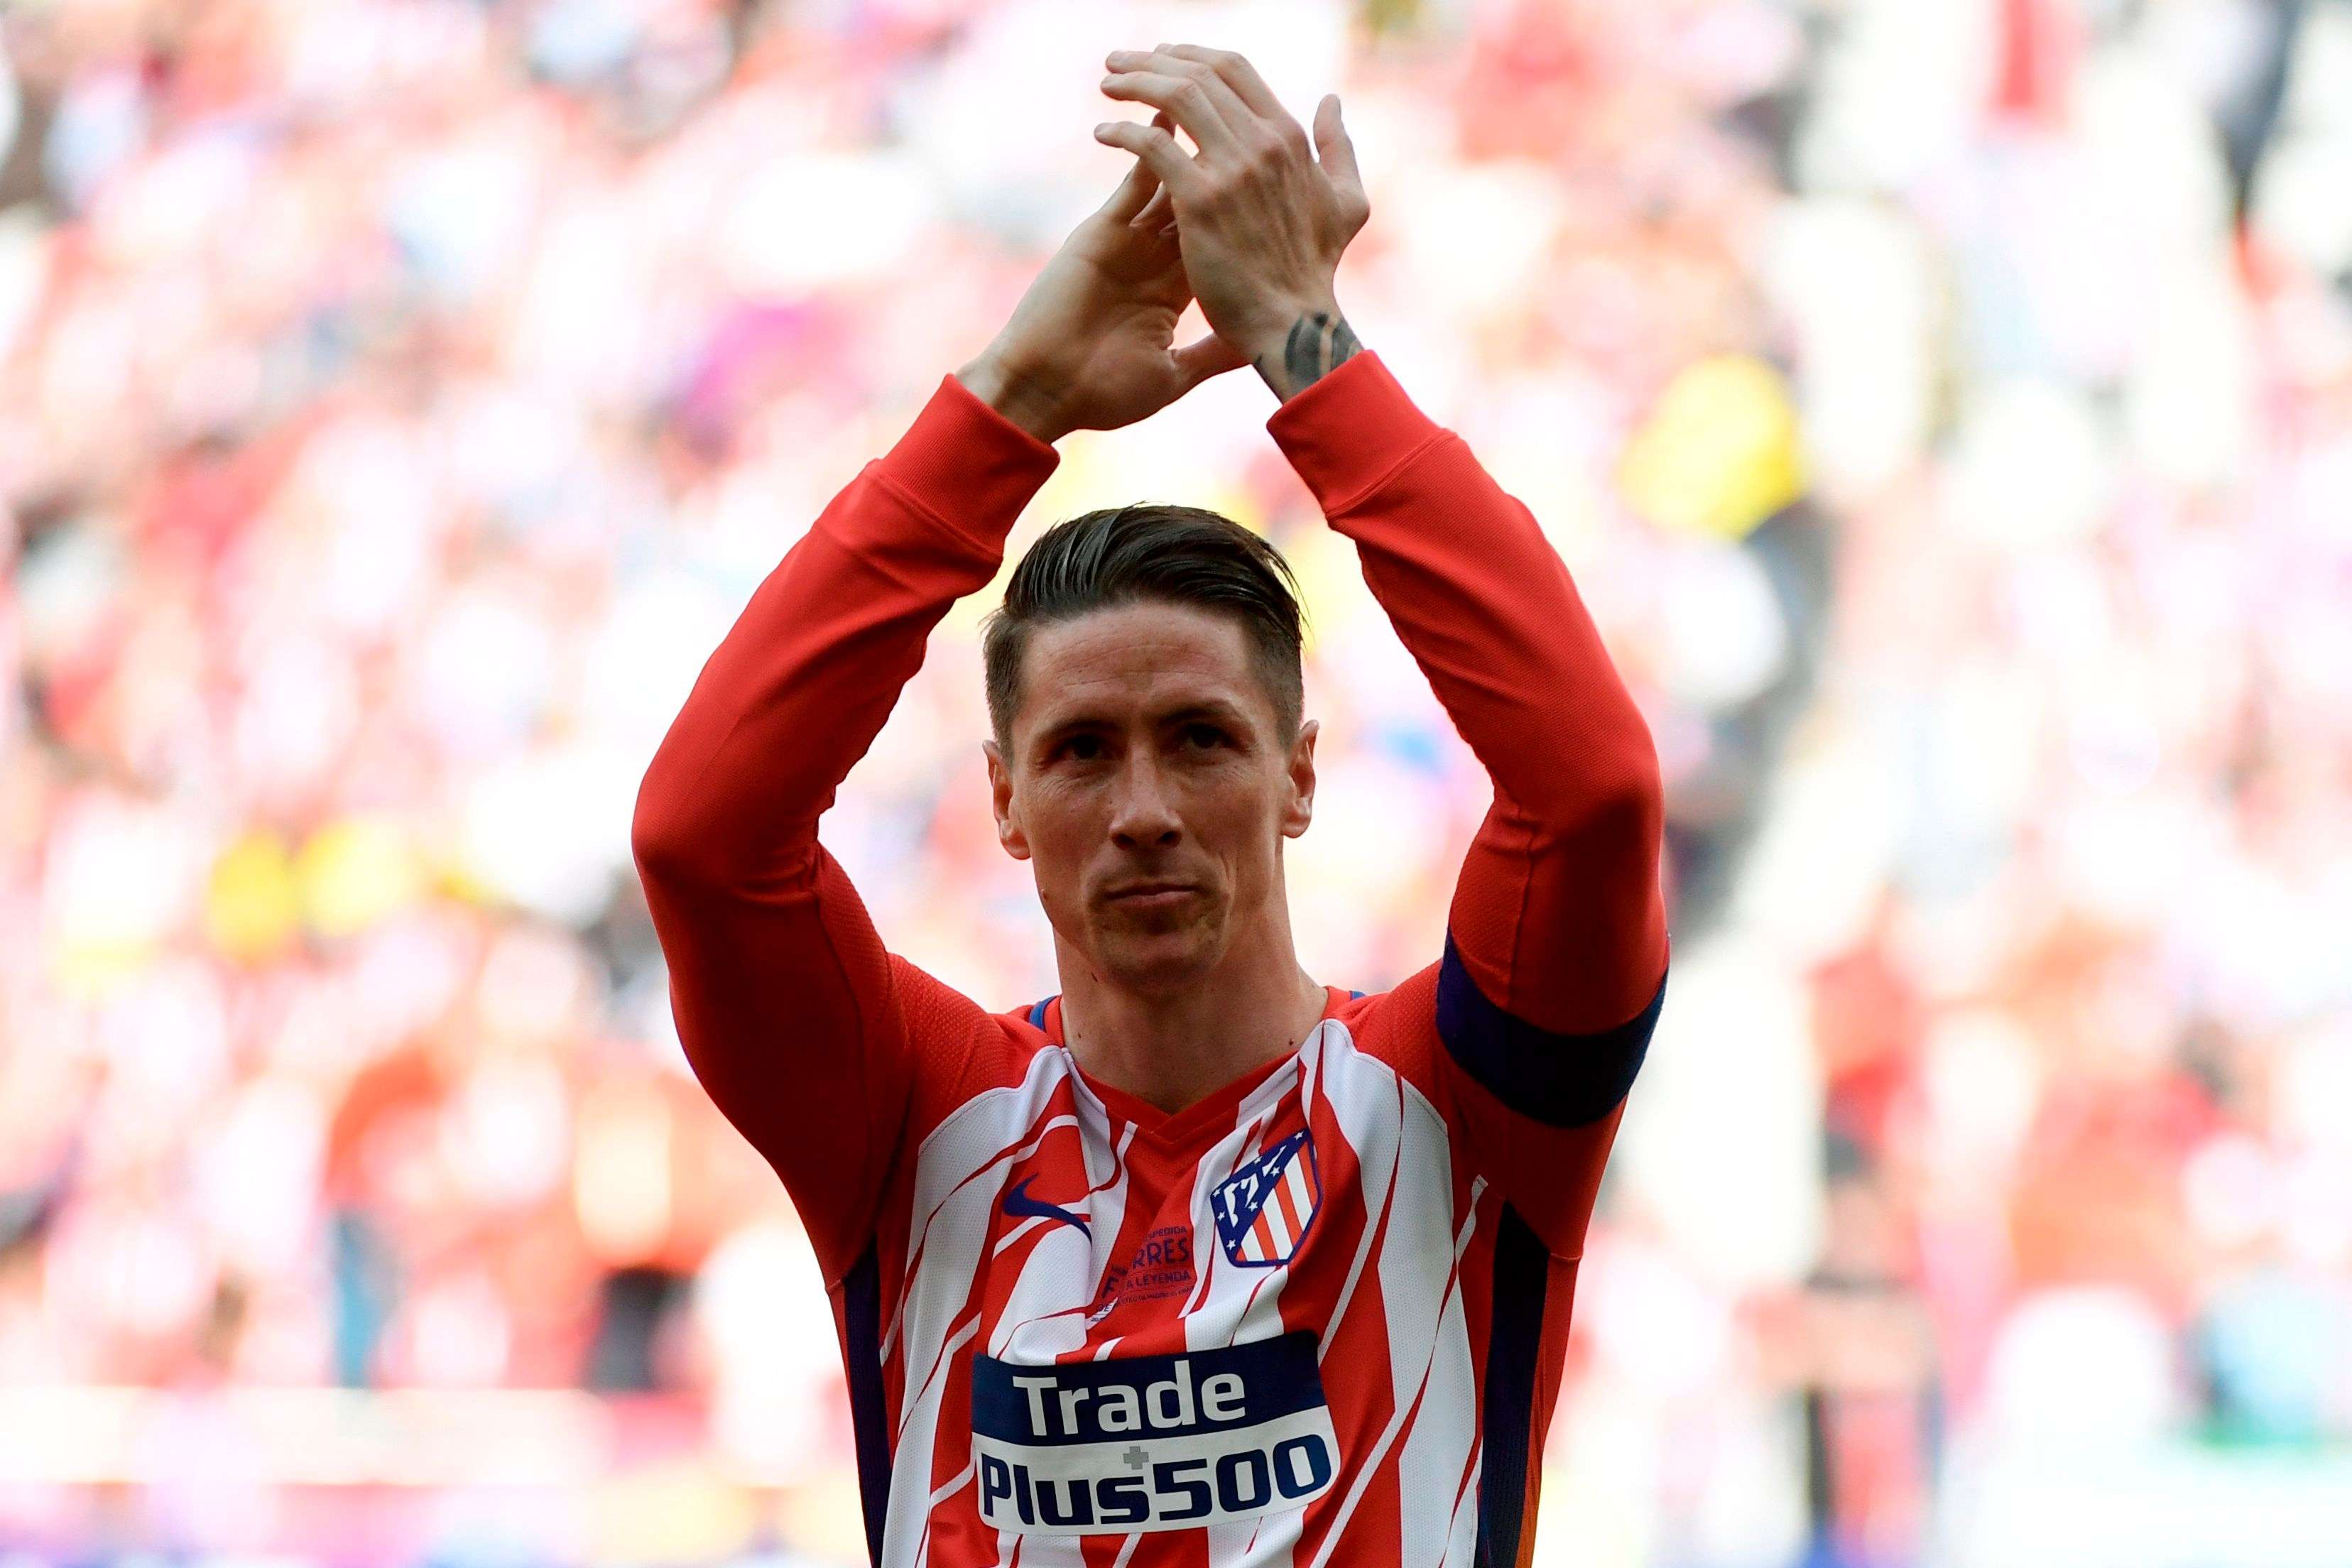 Fernando Torres Atletico Madrid